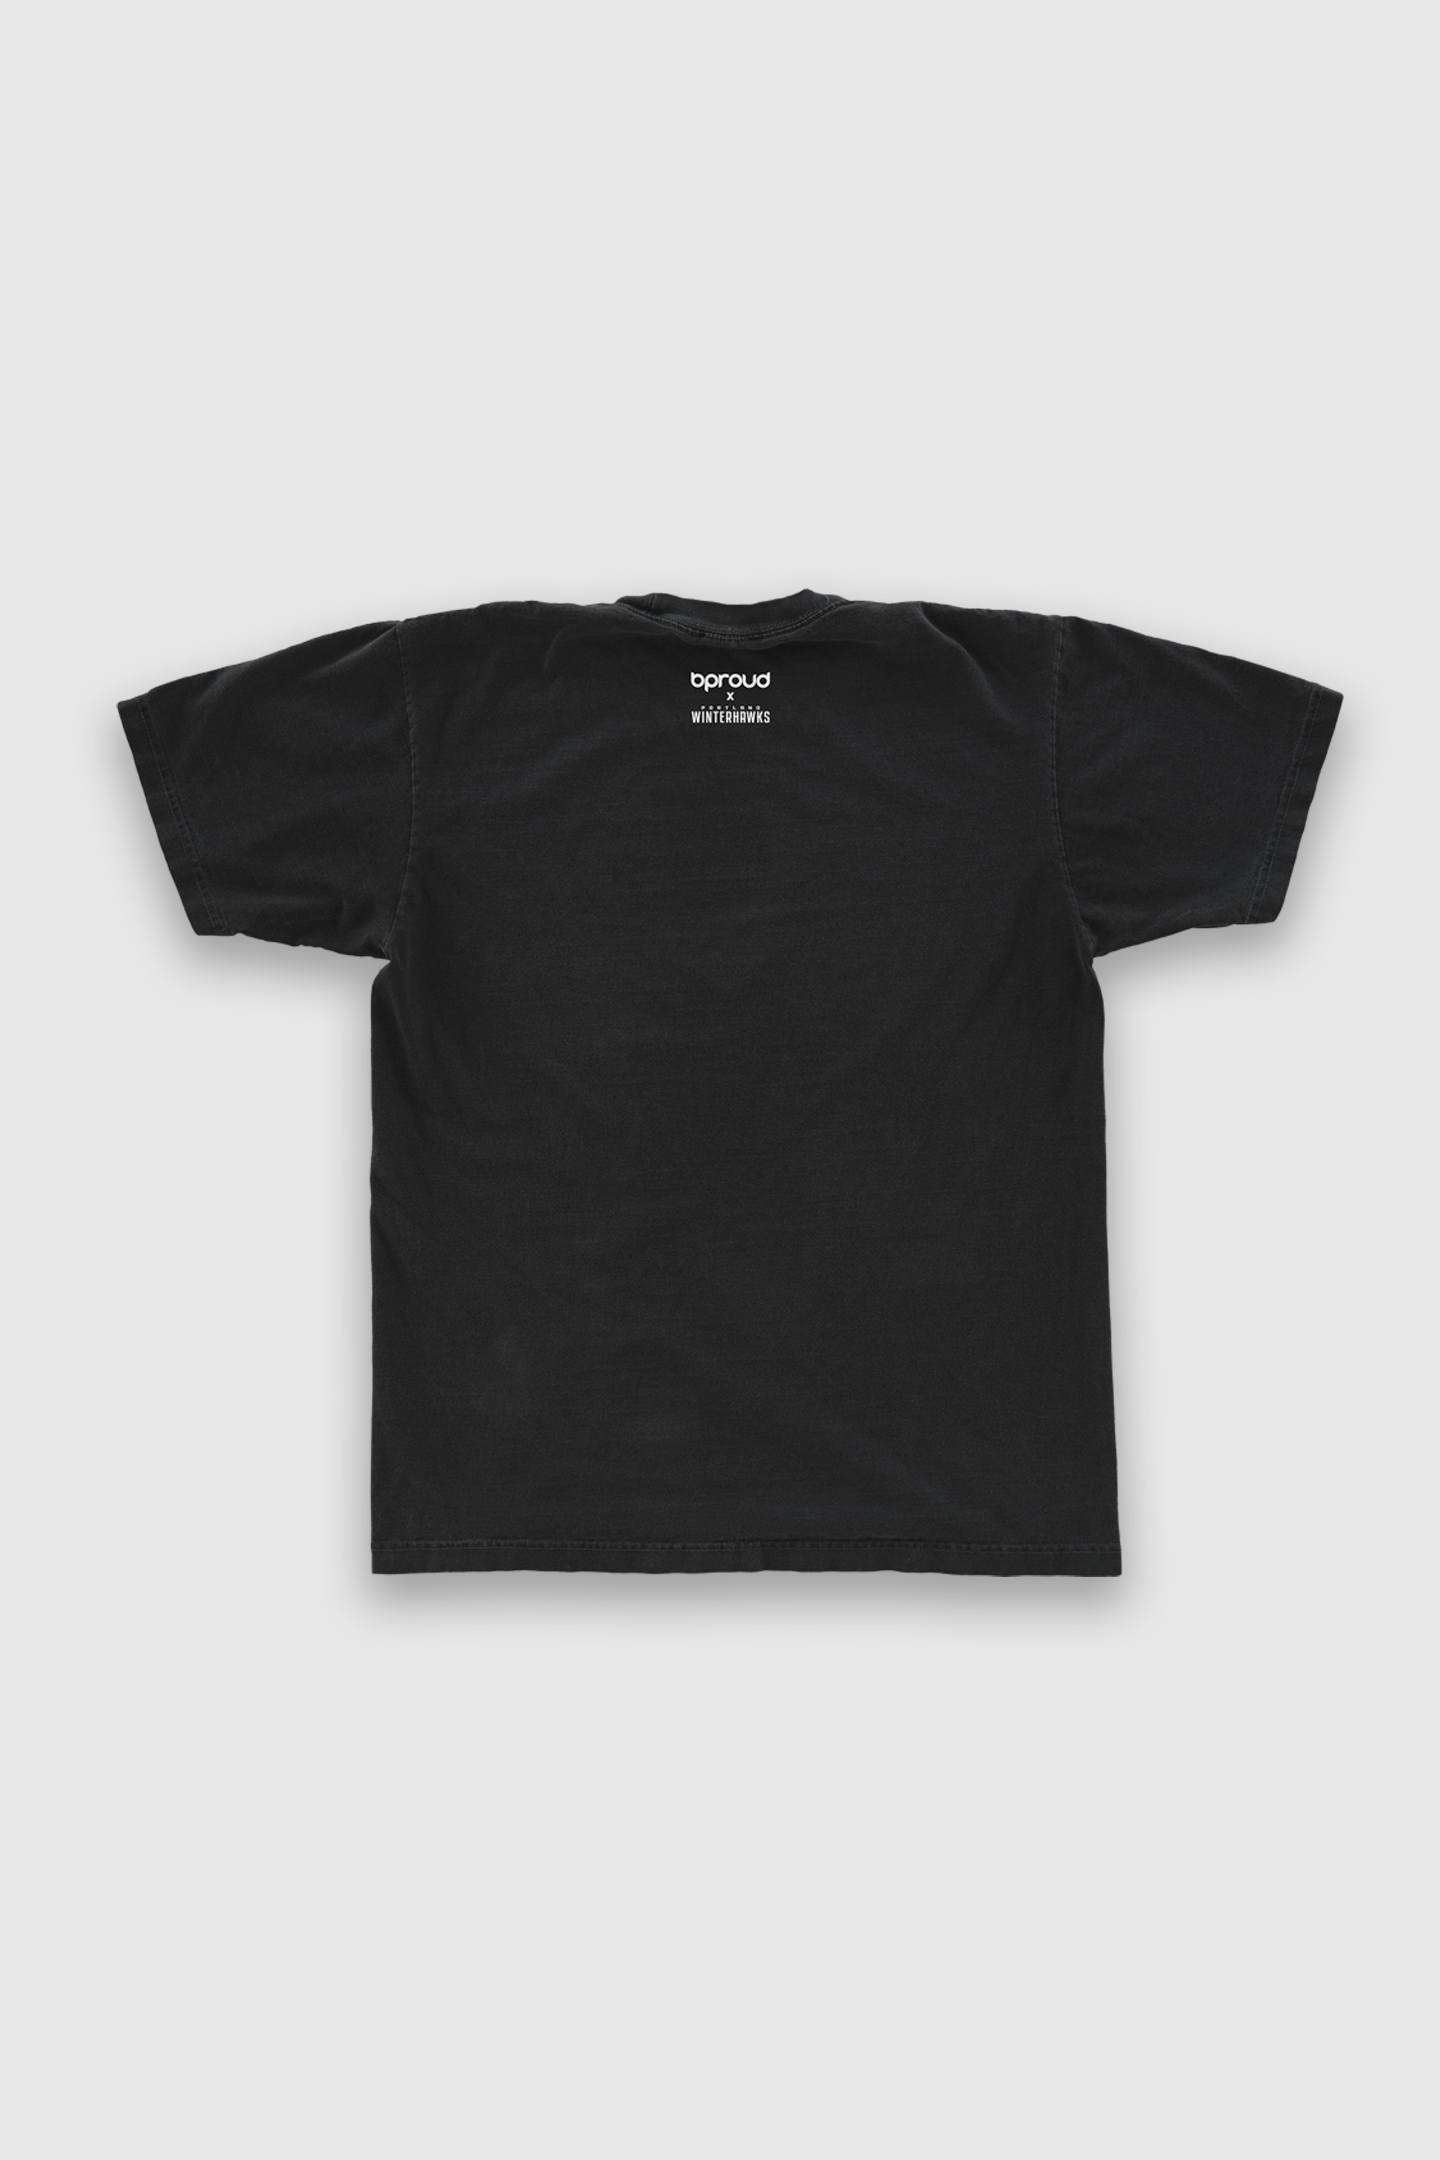 Bproud "Black Portland Winterhawks" T-Shirt